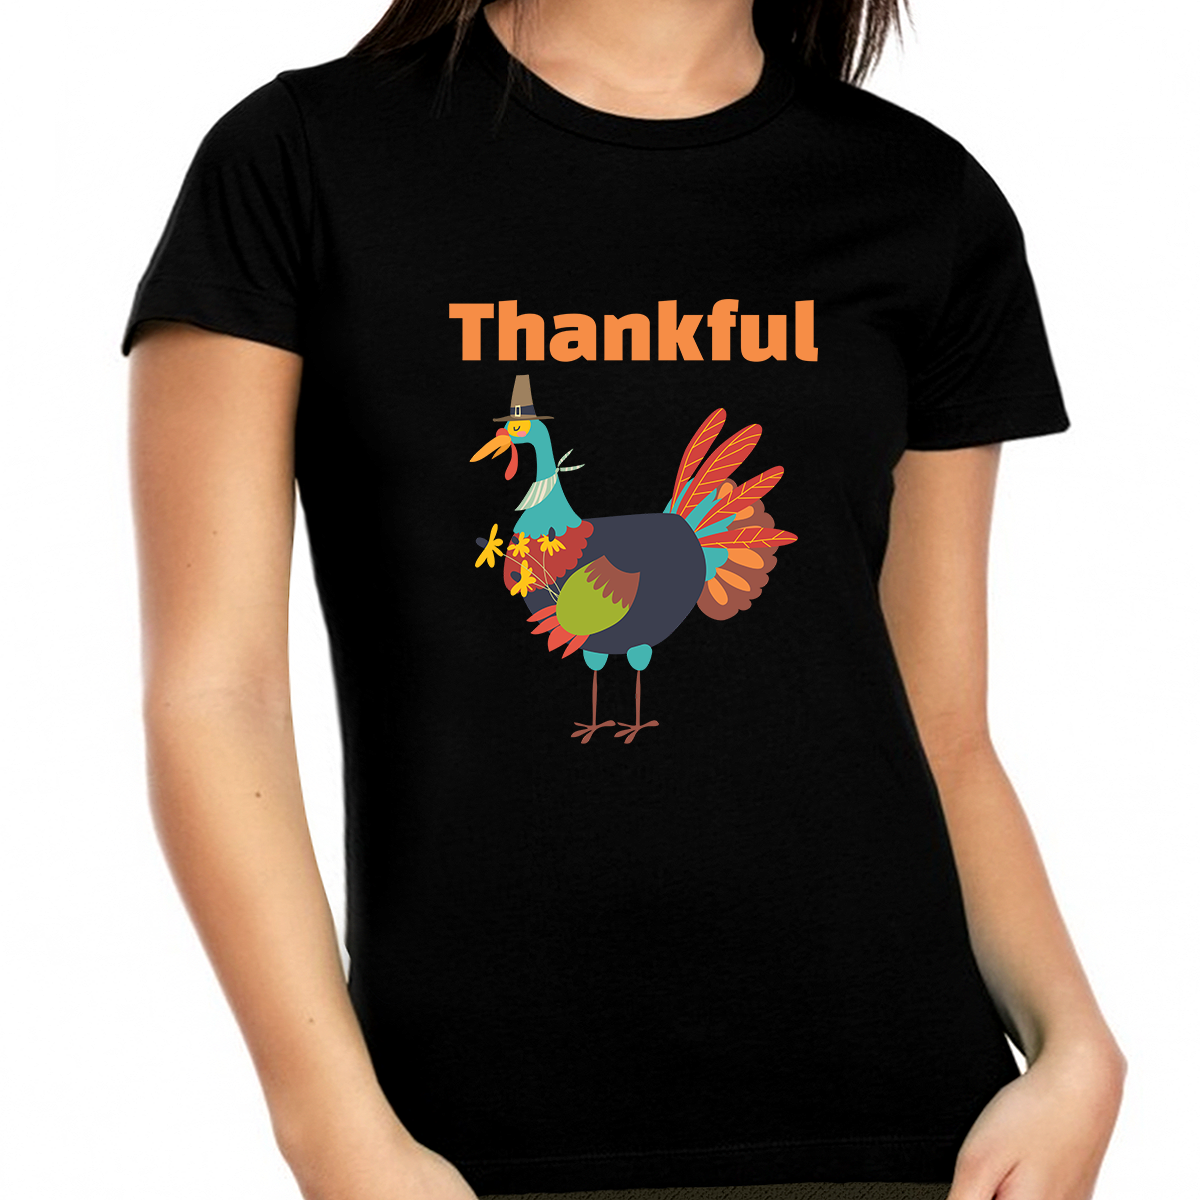 Plus Size Thanksgiving Shirts for Women Fall Clothes for Women Fall Tops for Women Plus Size Turkey Shirt